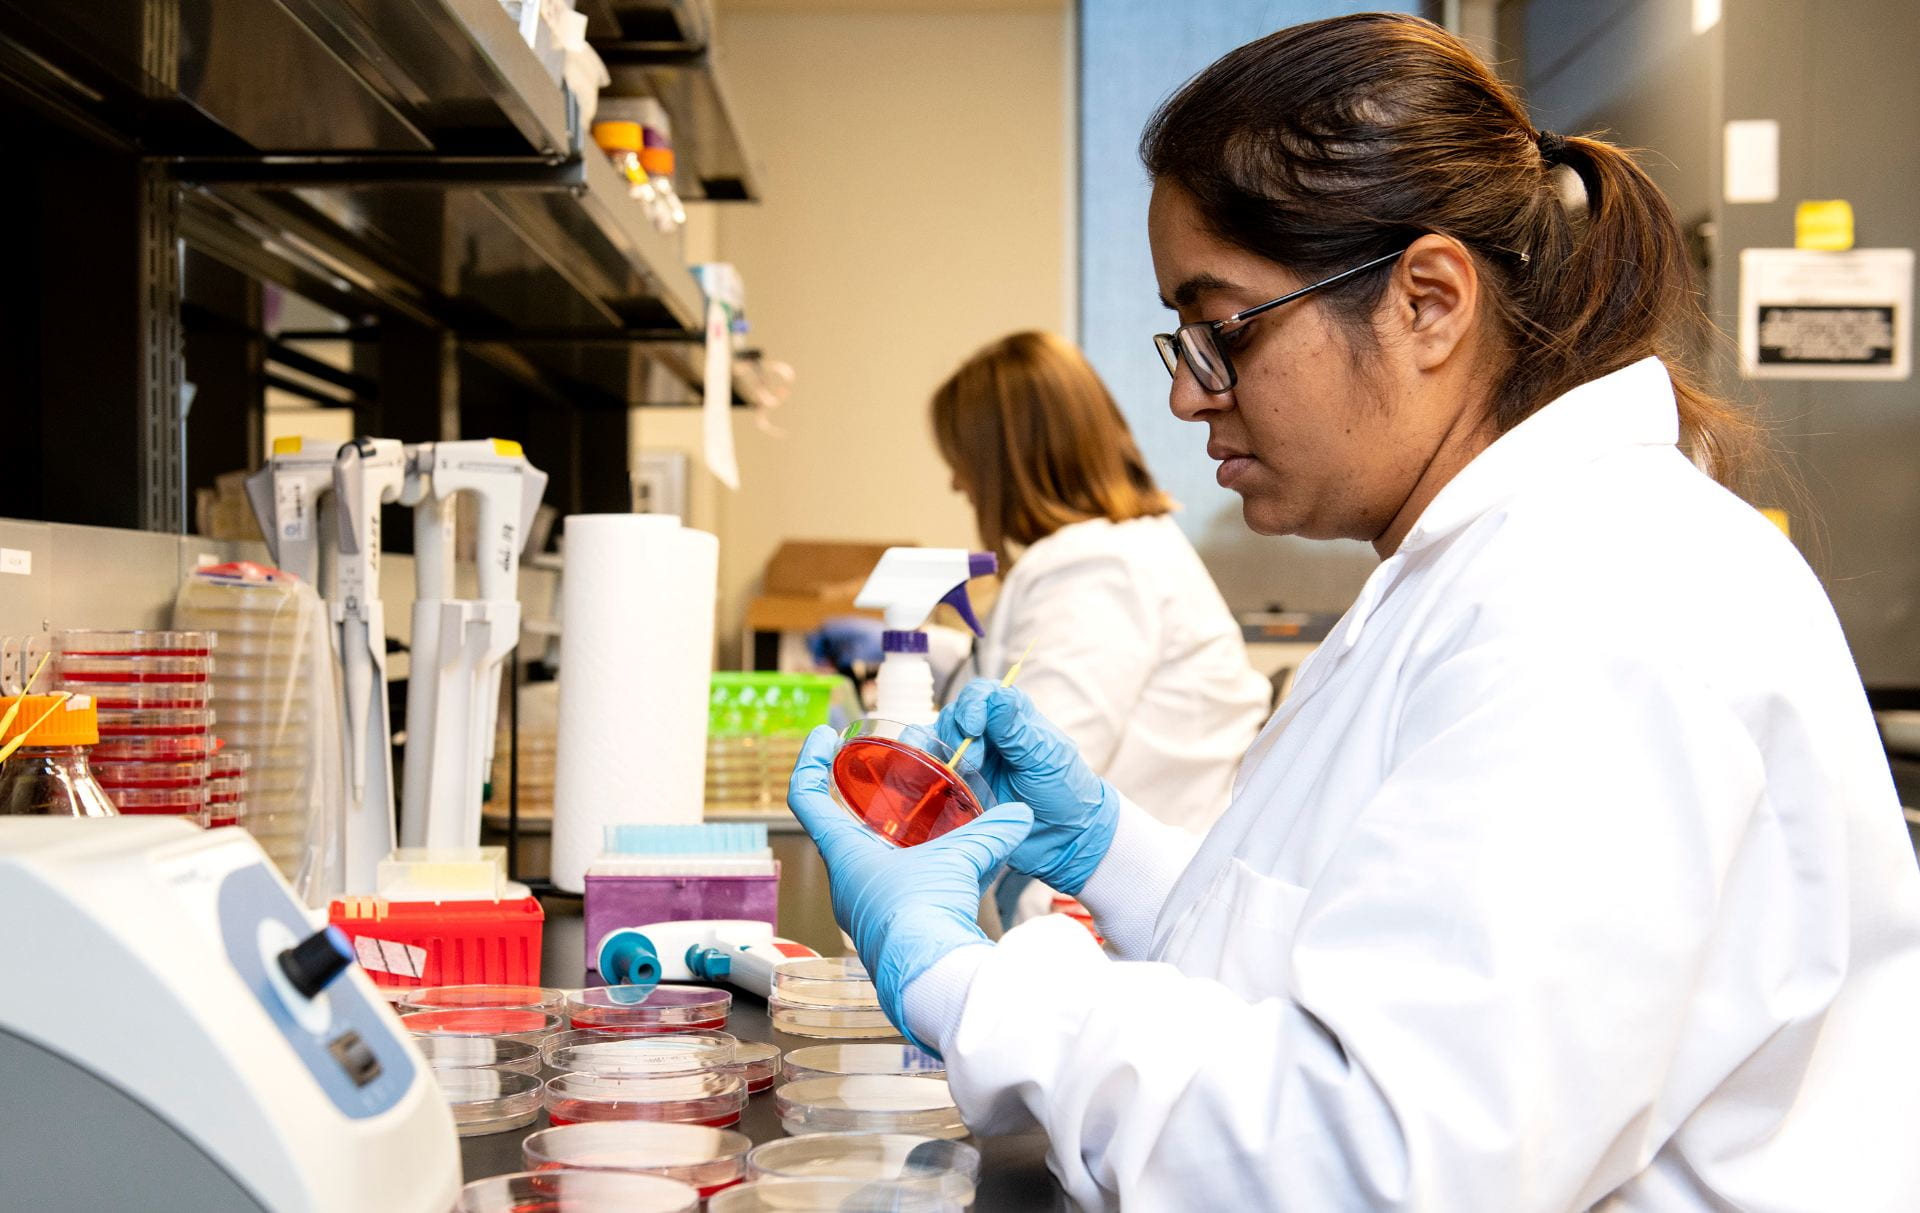 Woman wearing white lab coat examines a petri dish